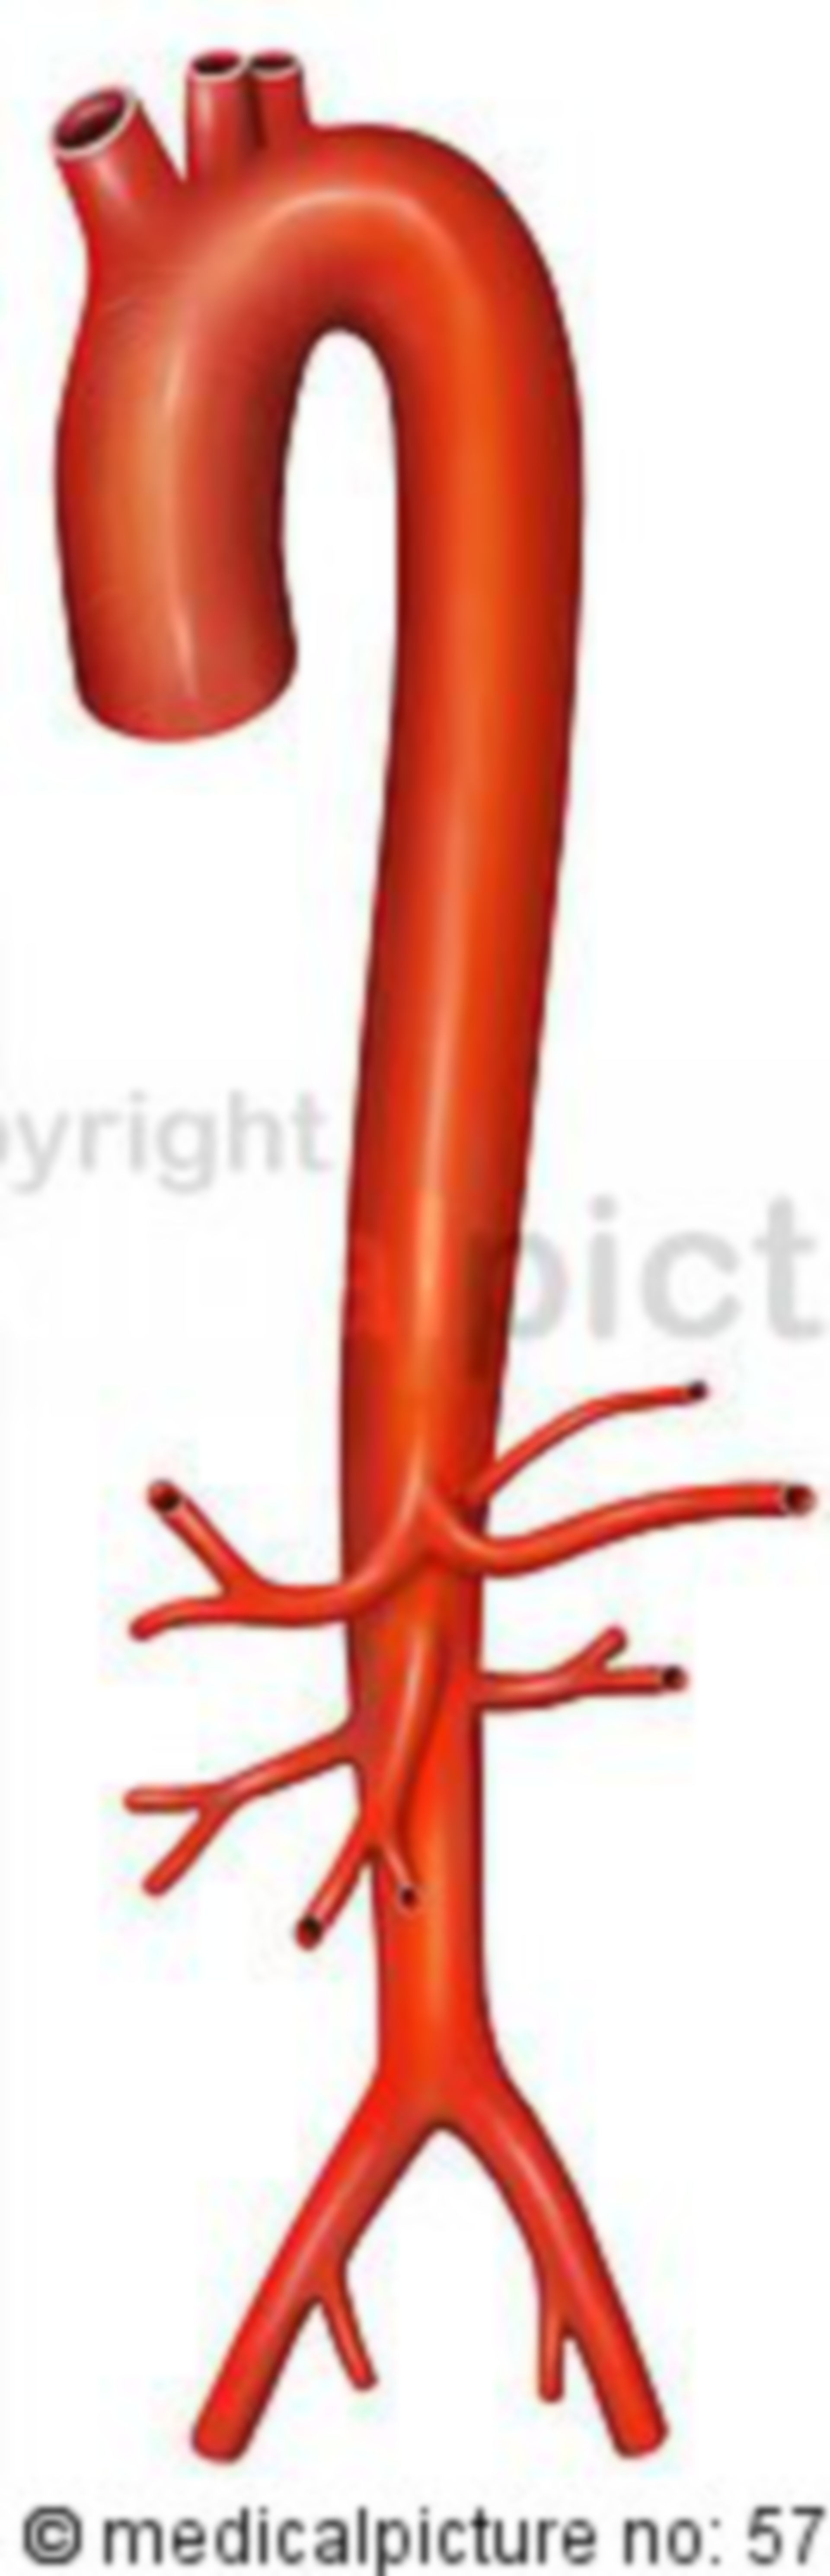 Anatomische Illustrationen - Aorta